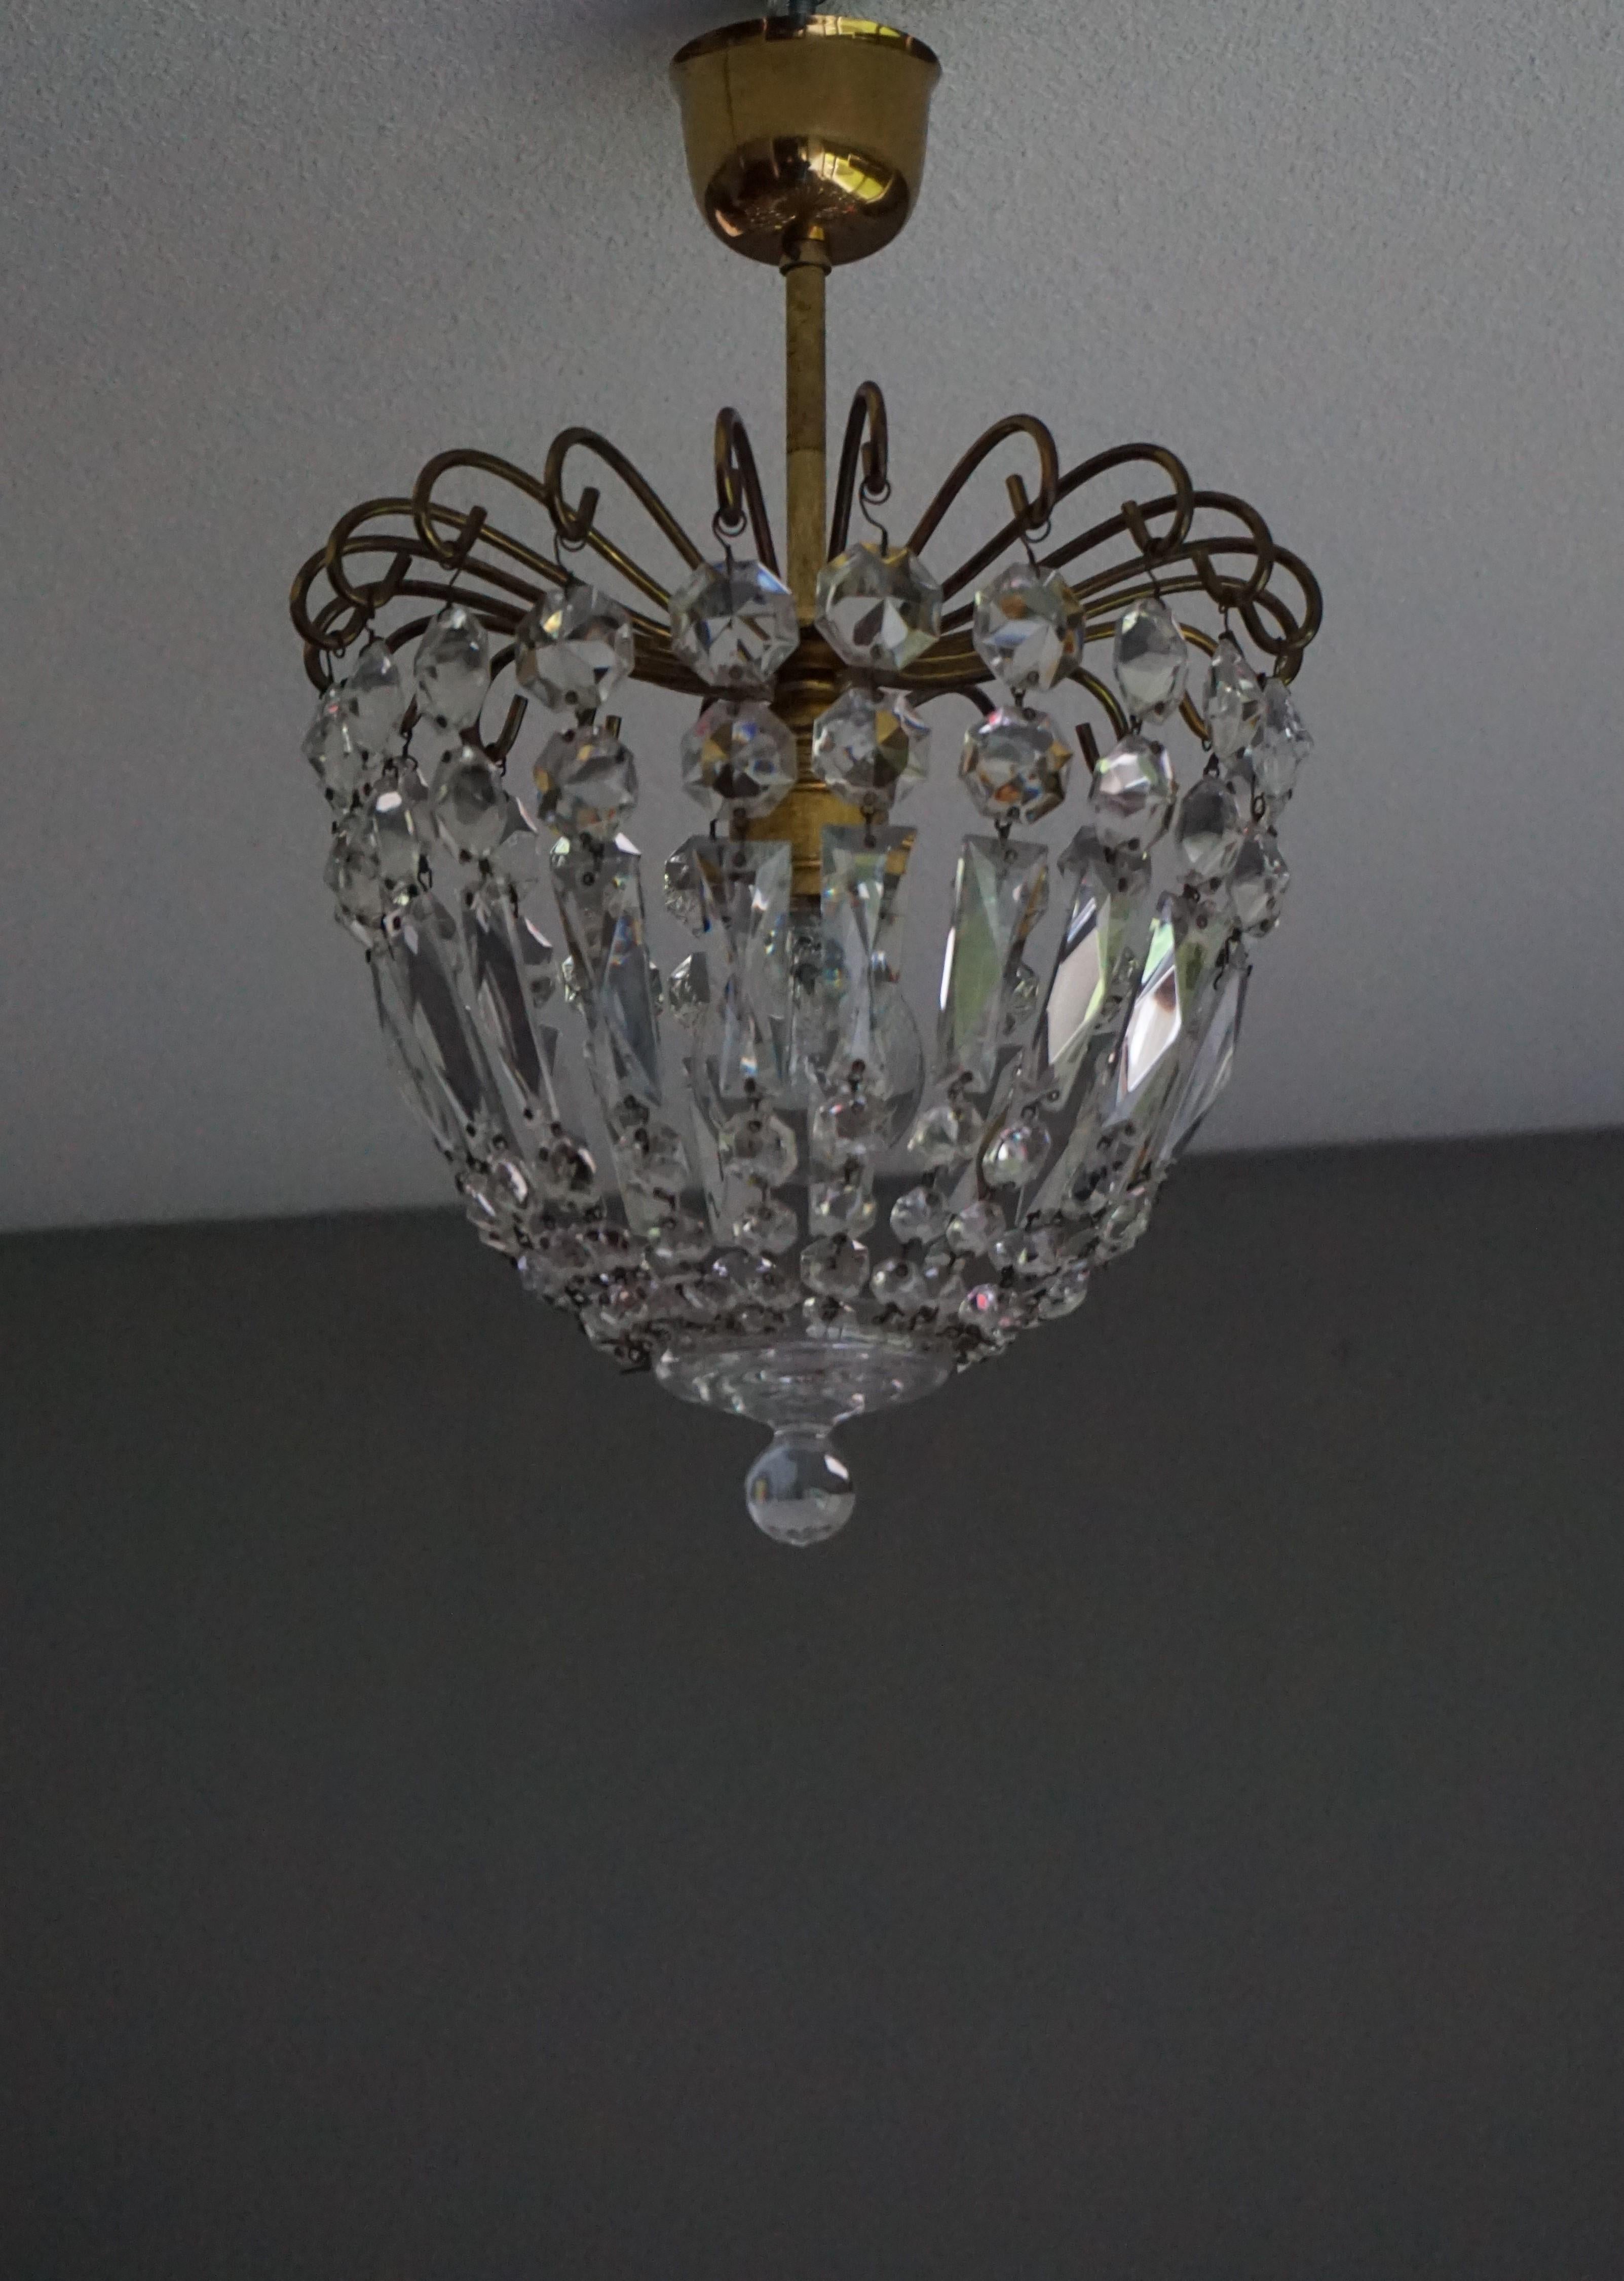 Stylish Little Mid Century Brass and Crystal Glass Murano Pendant Light Fixture 4